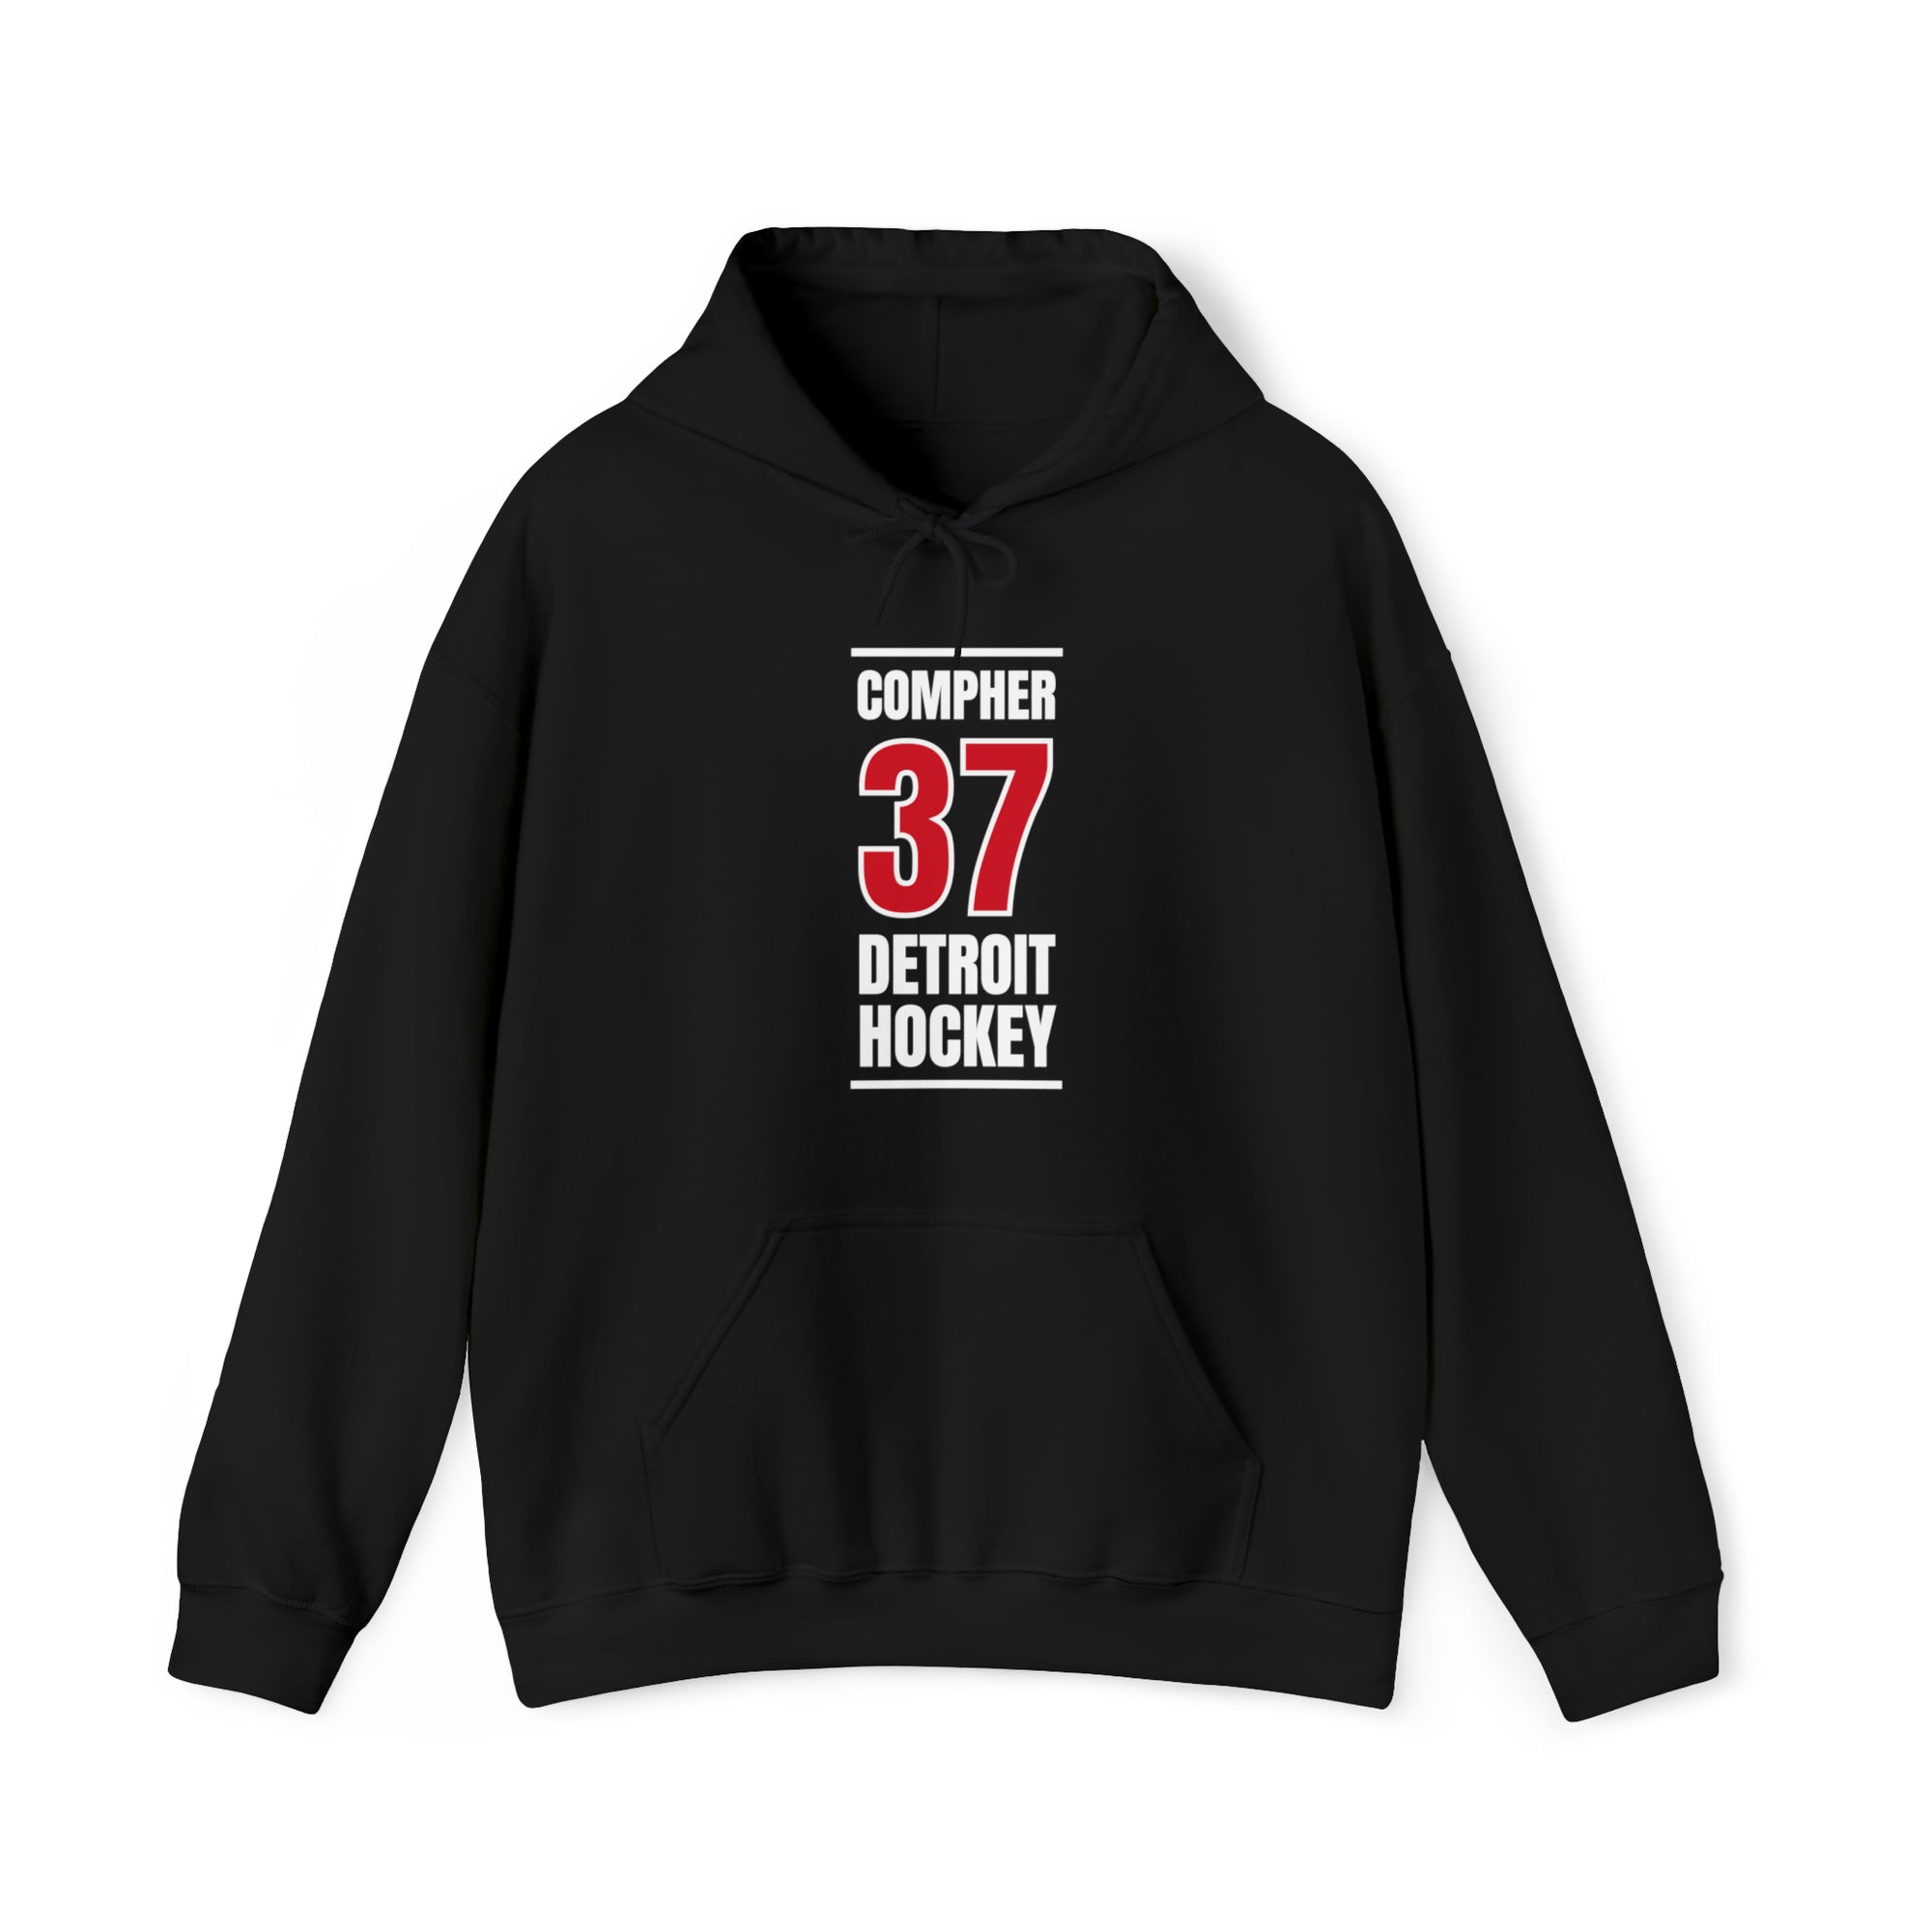 Compher 37 Detroit Hockey Red Vertical Design Unisex Hooded Sweatshirt